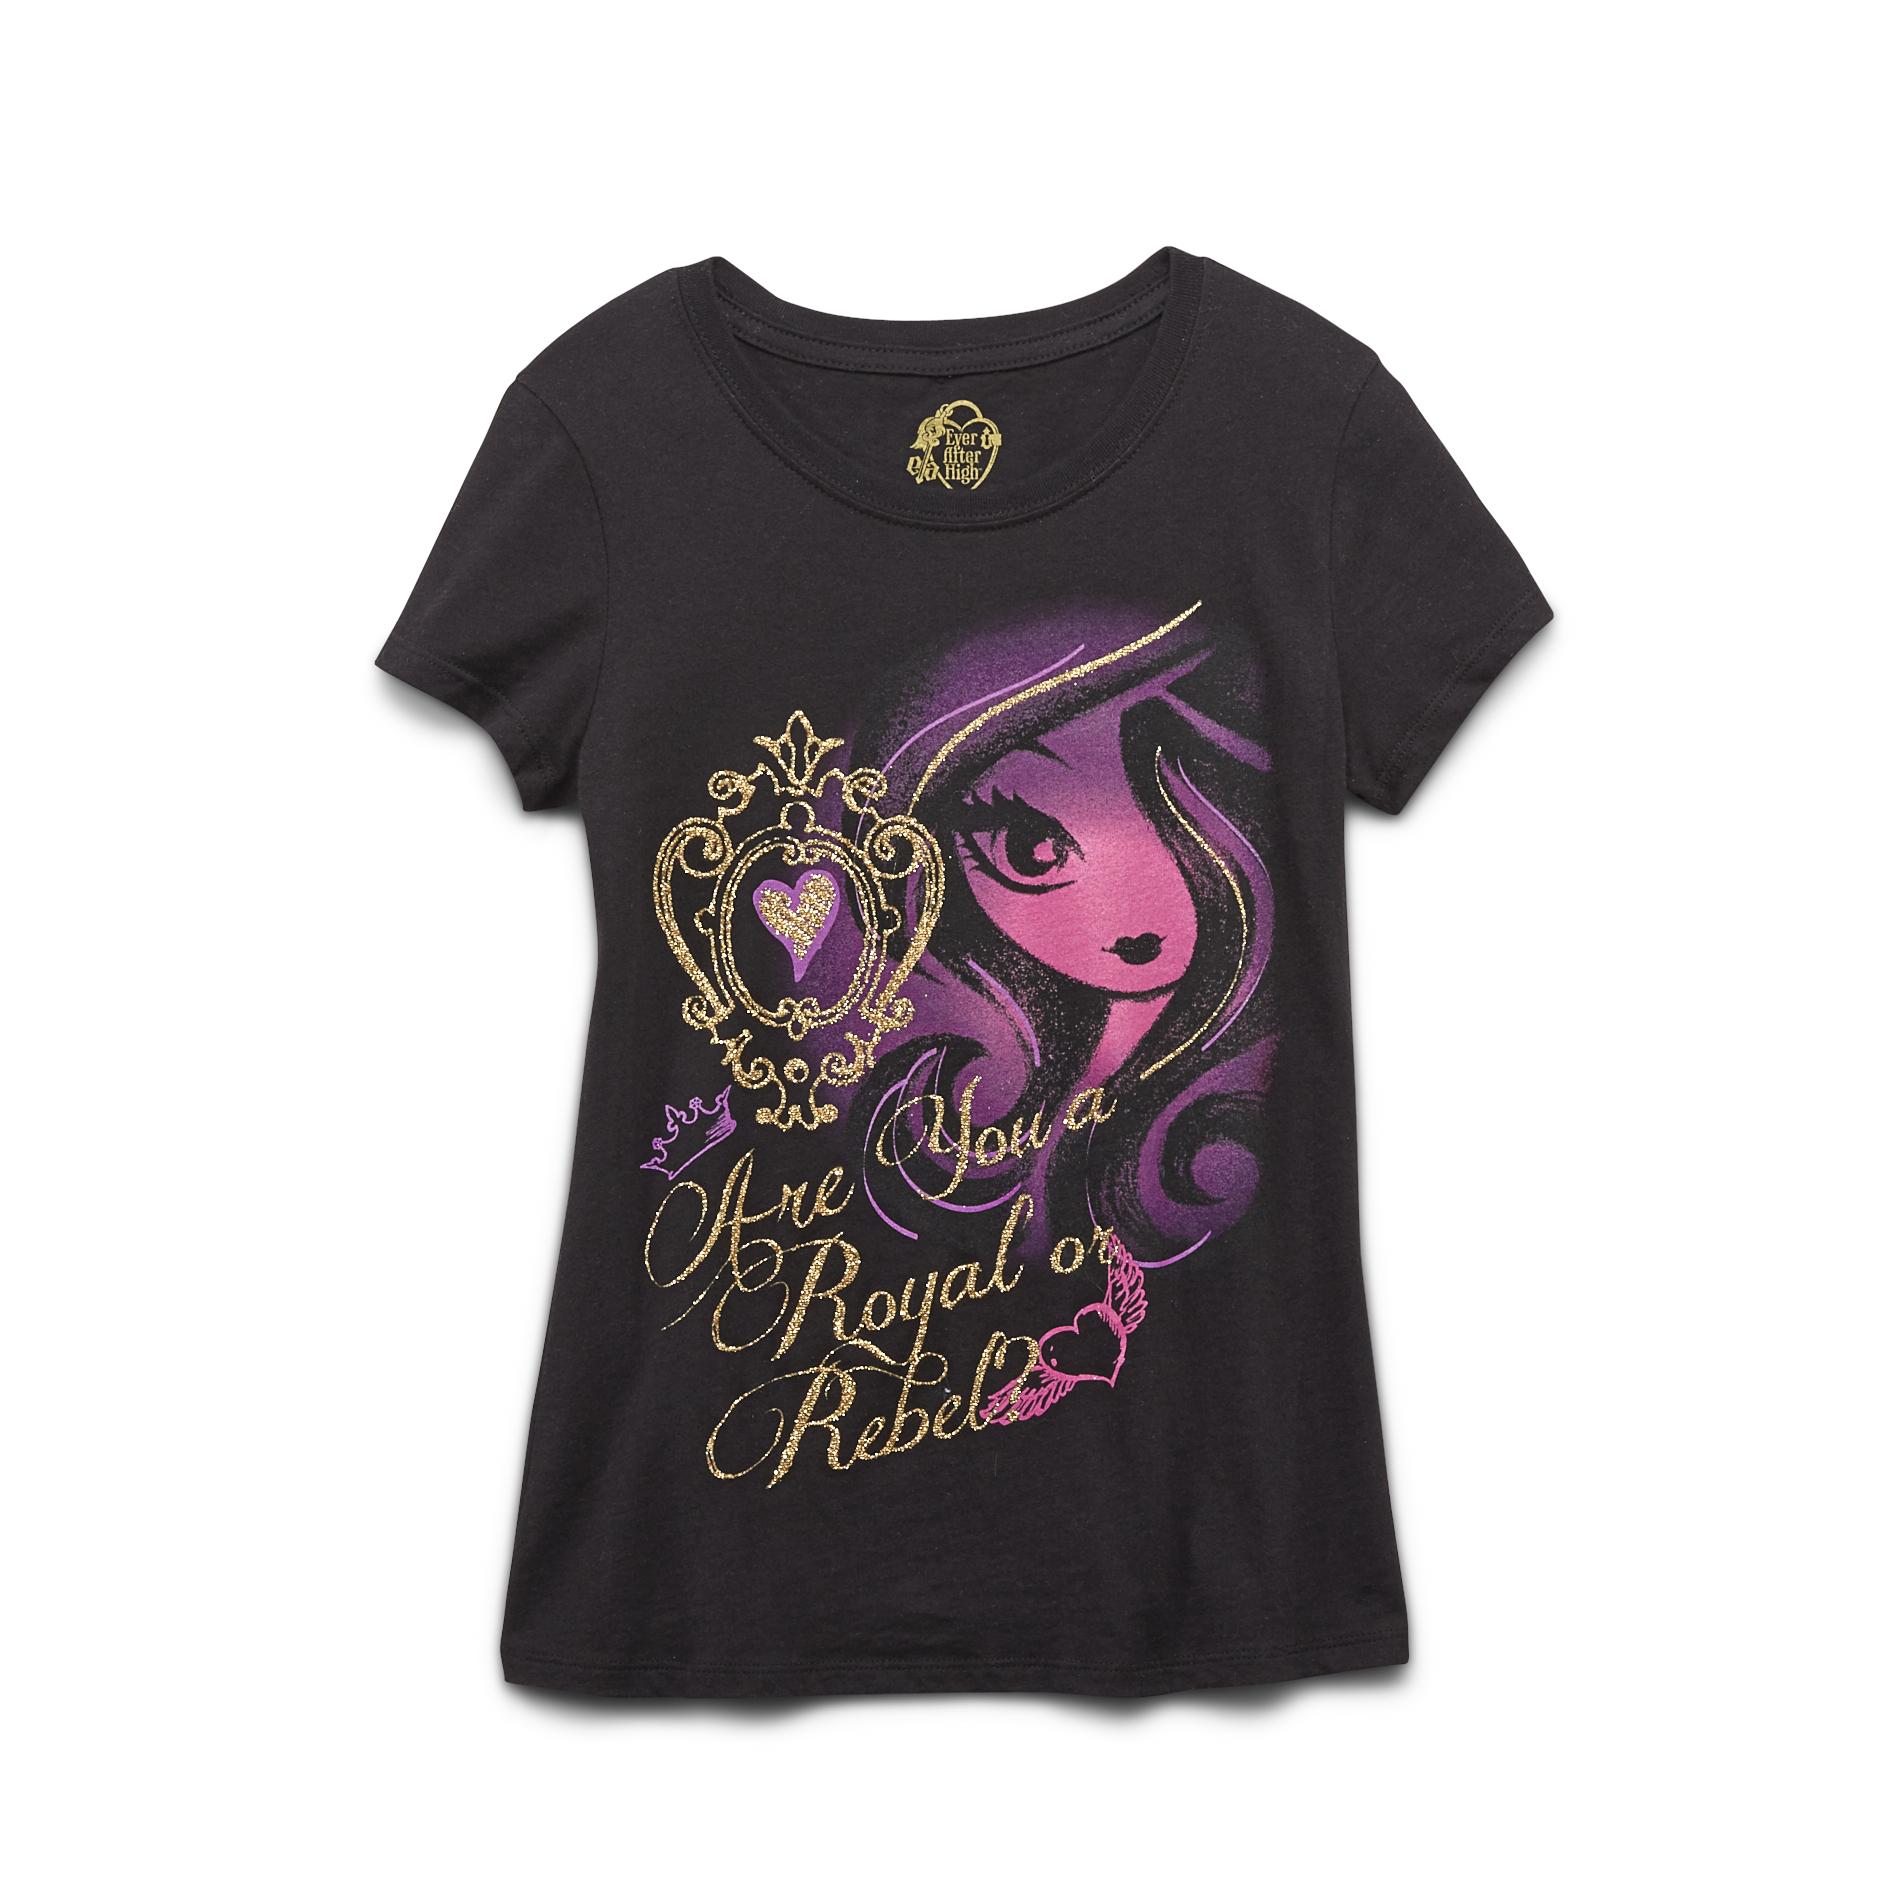 Mattel Girl's T-Shirt - Royal Or Rebel